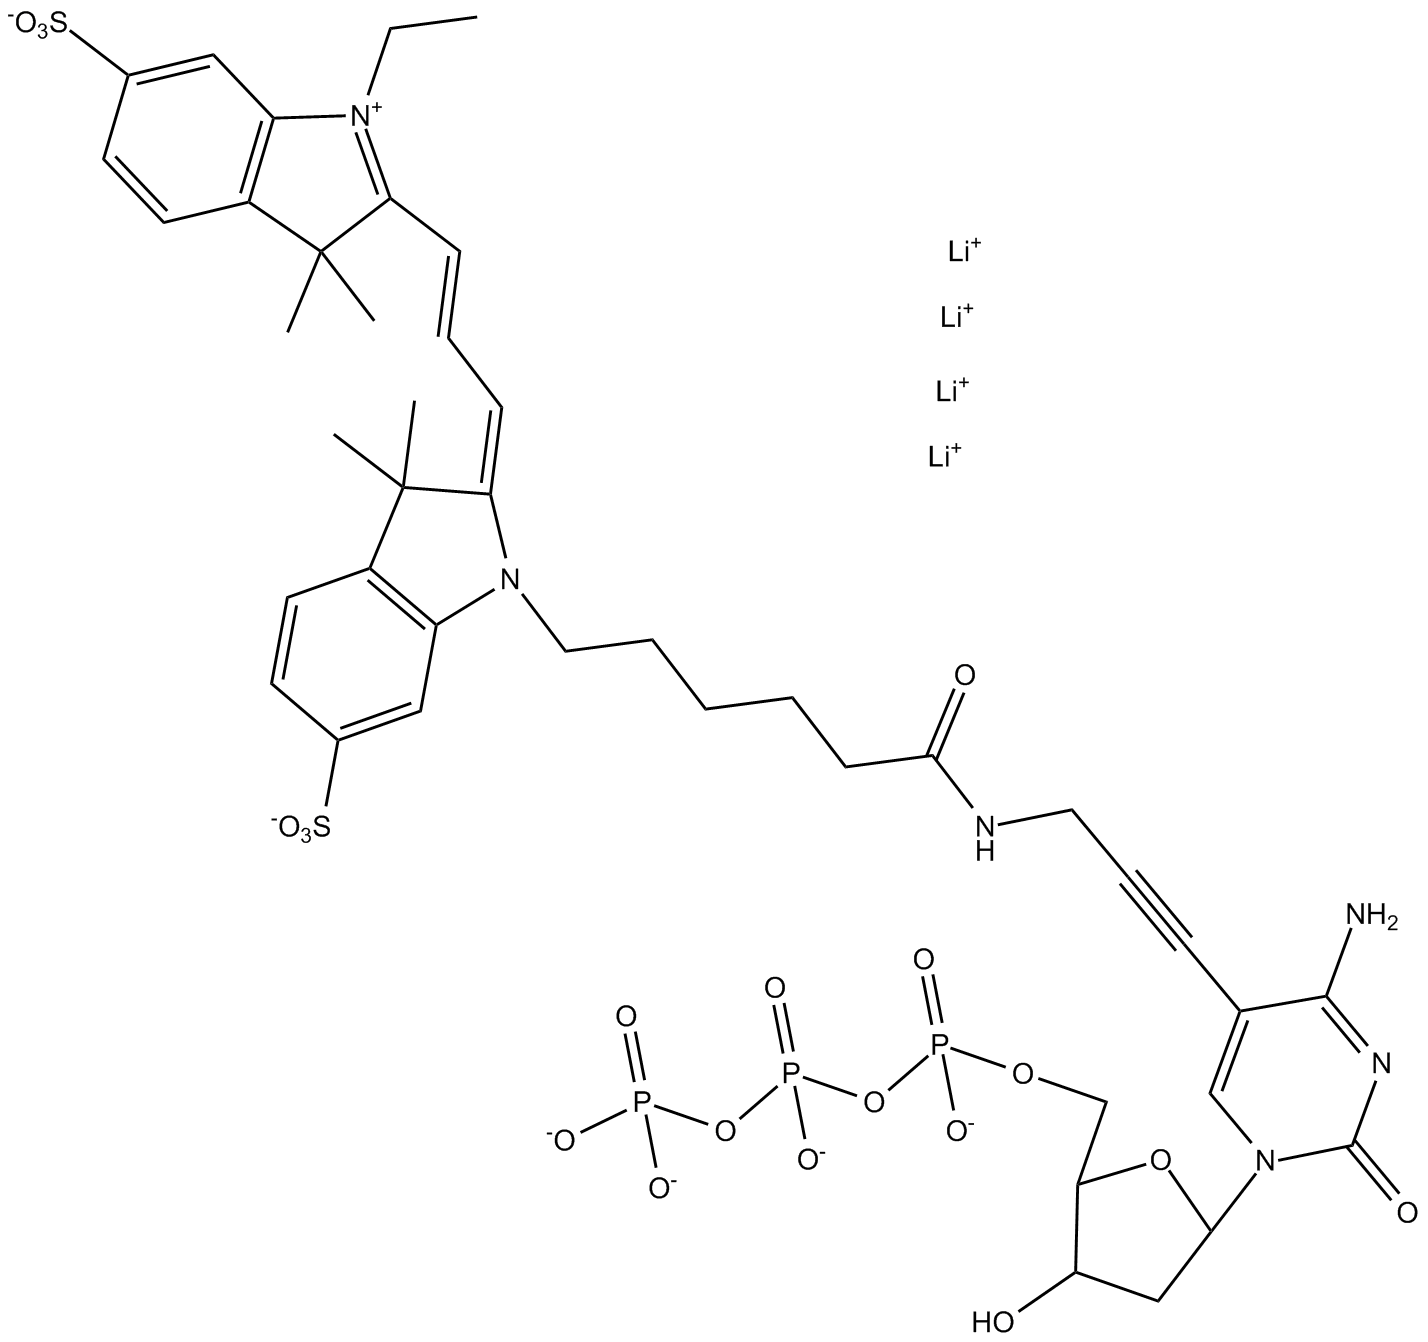 Cyanine 3-dCTP